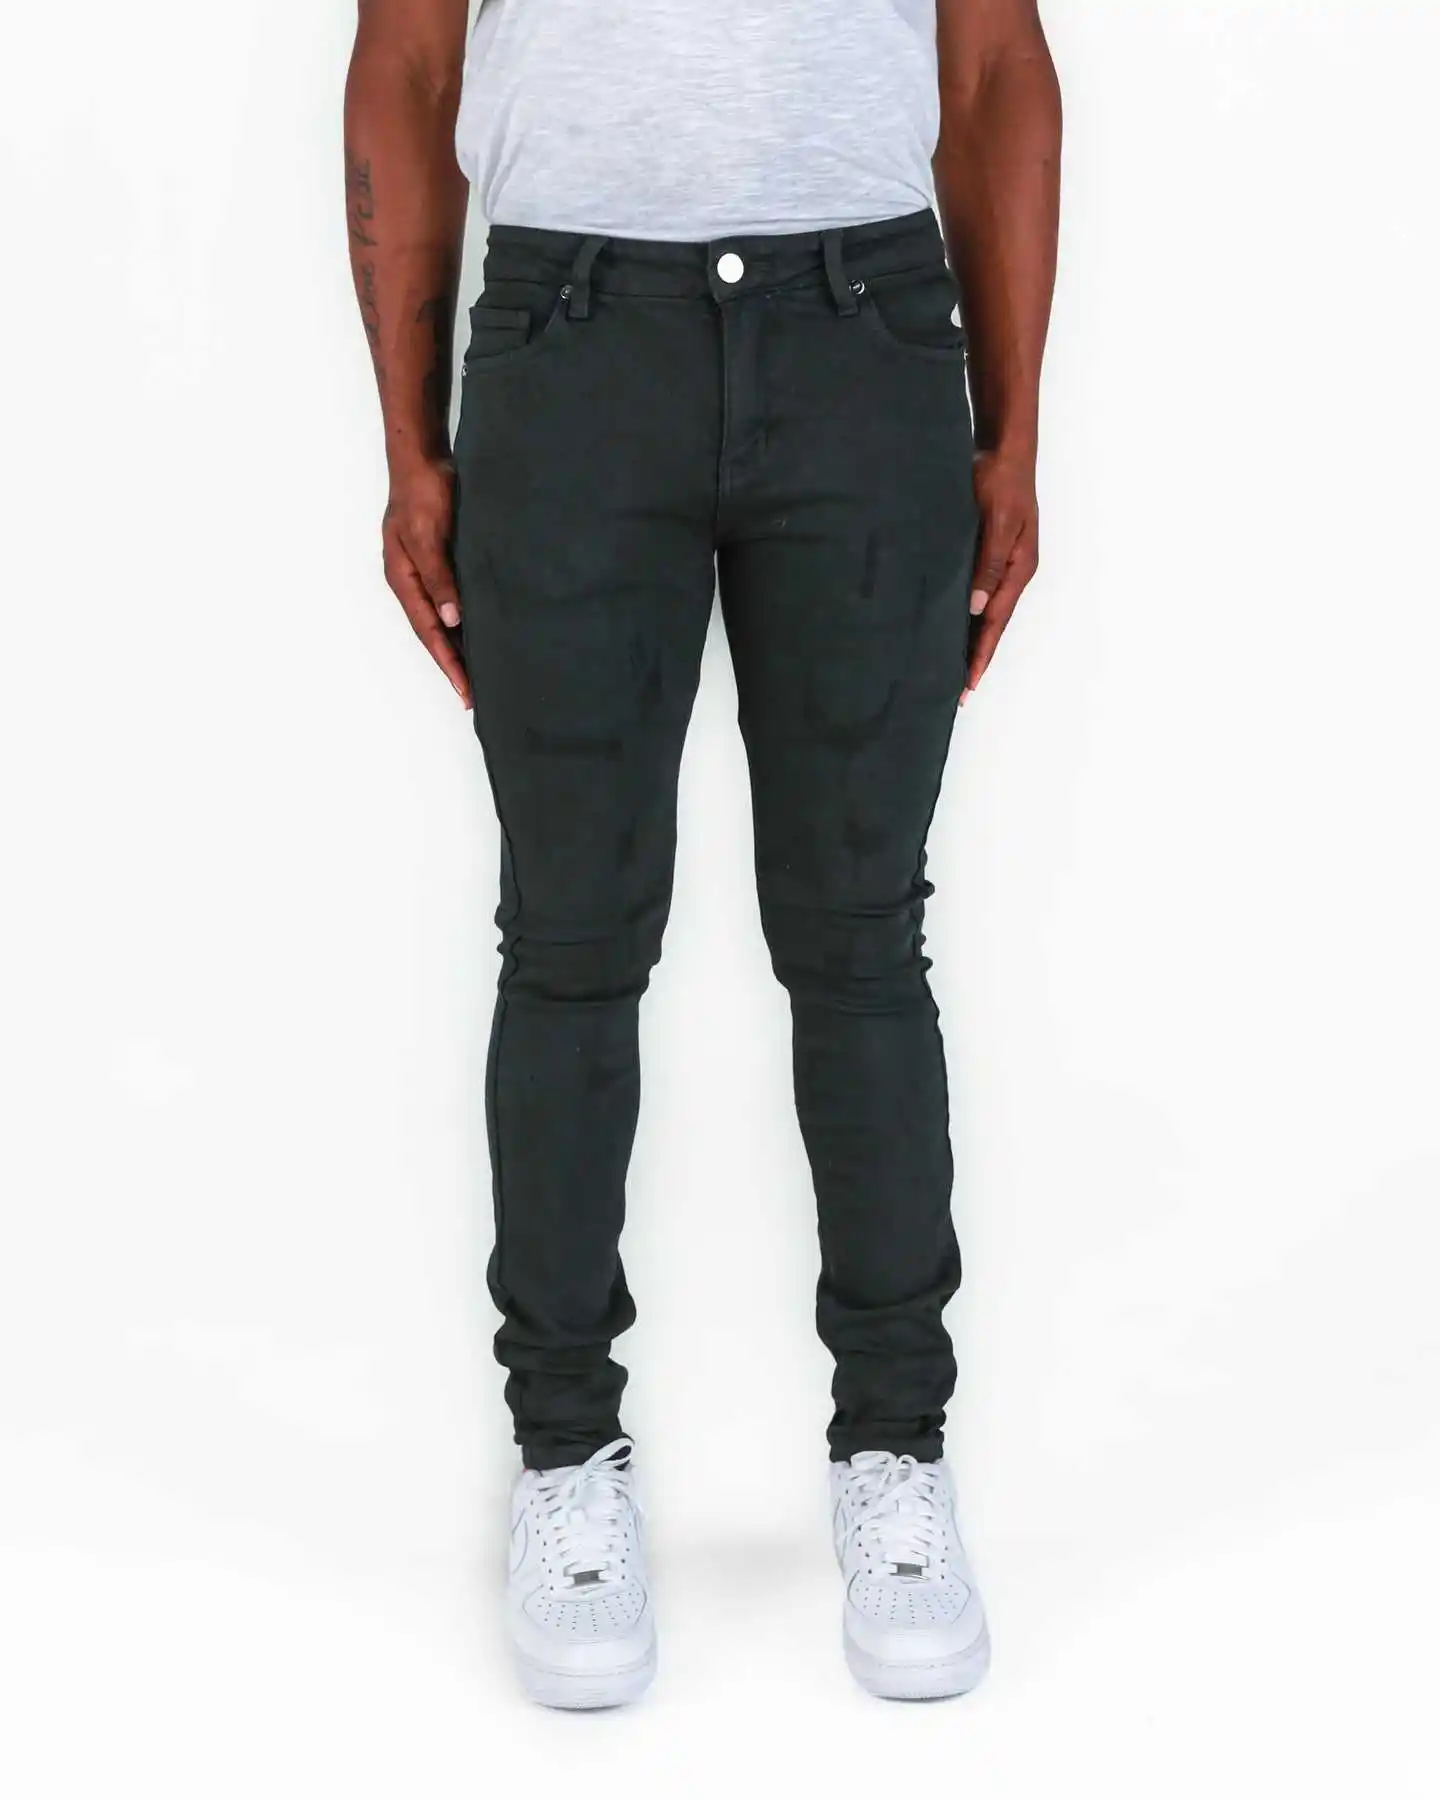 AEEDENIM מלאי חדש צבע גברים סקיני ג'ינס 3 צבעים גברים ישר מכנסיים ז'אן לוגו מותאם אישית